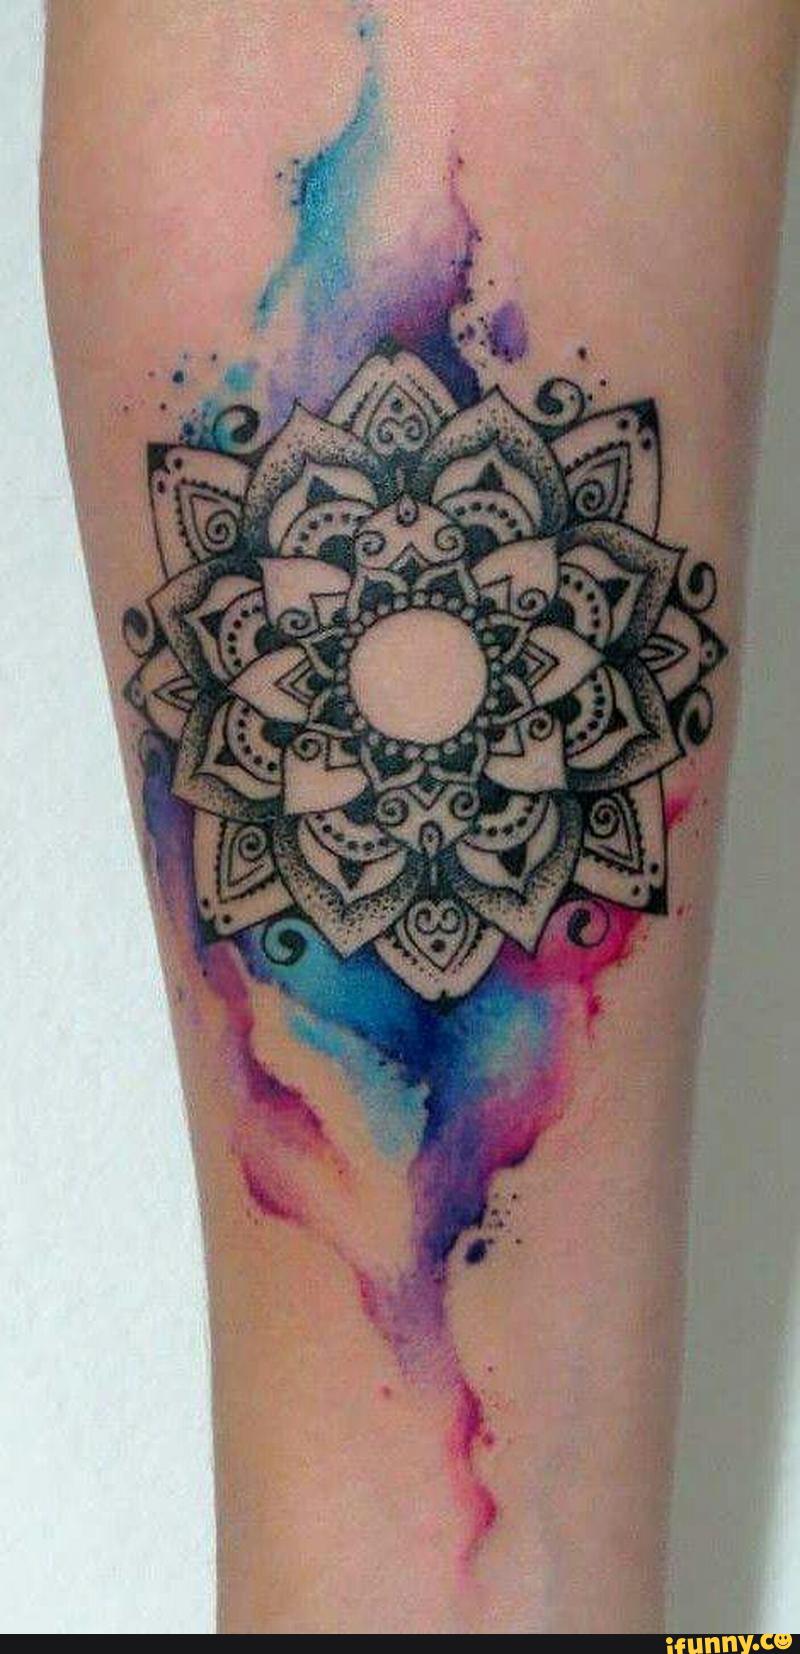 Watercolor Mandala Flower Tattoo On Forearm